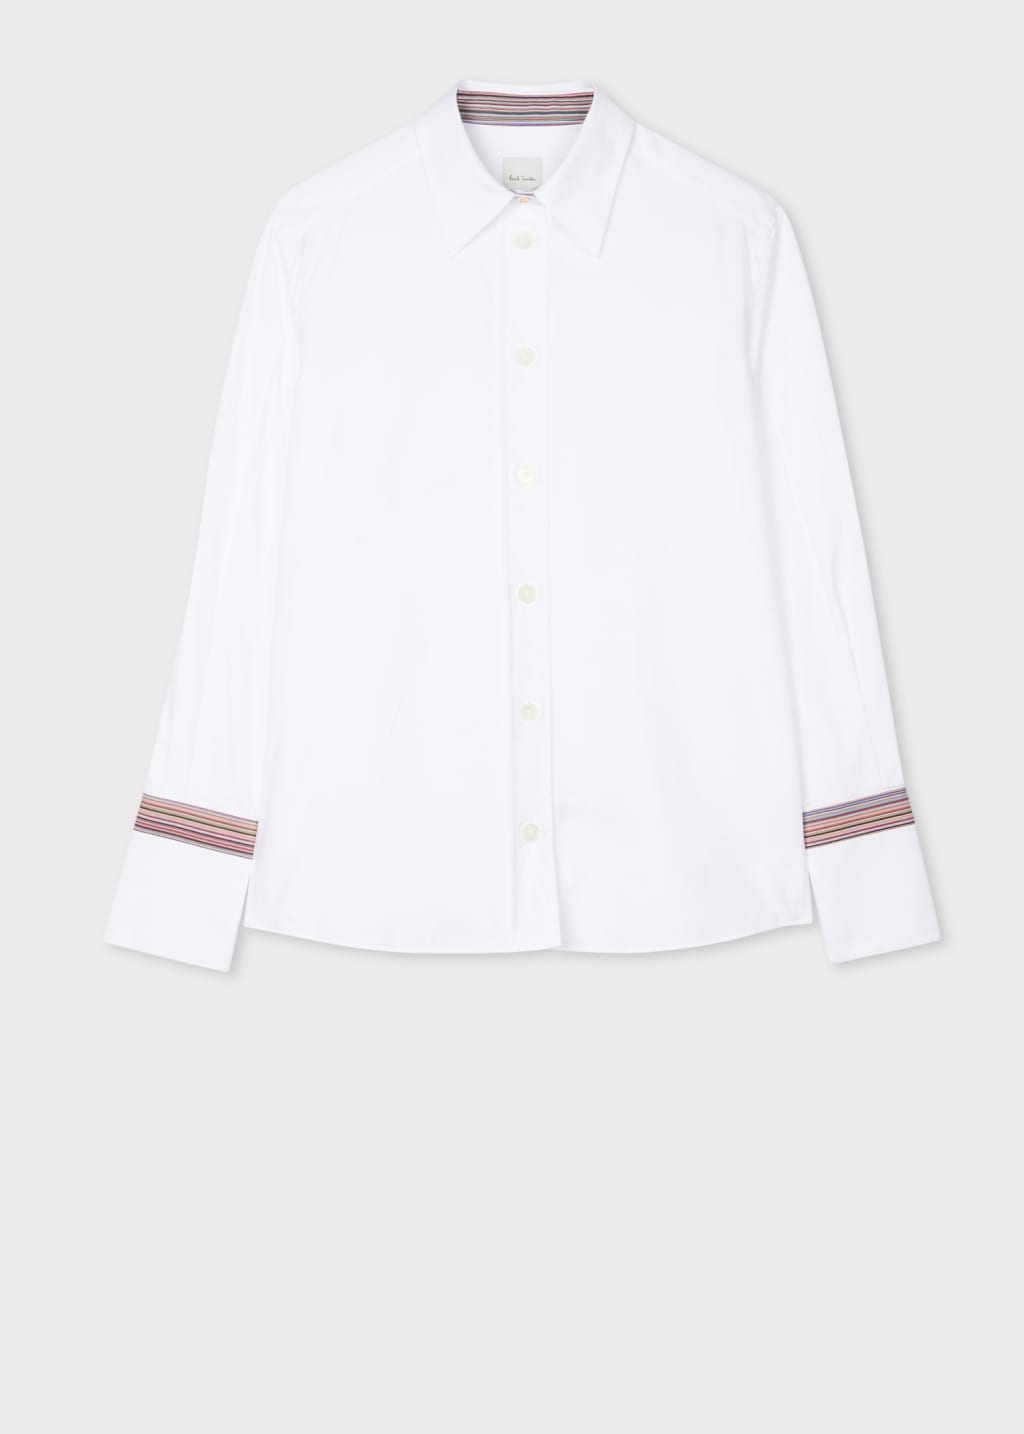 Front View - Women's White 'Signature Stripe' Cuff Shirt Paul Smith